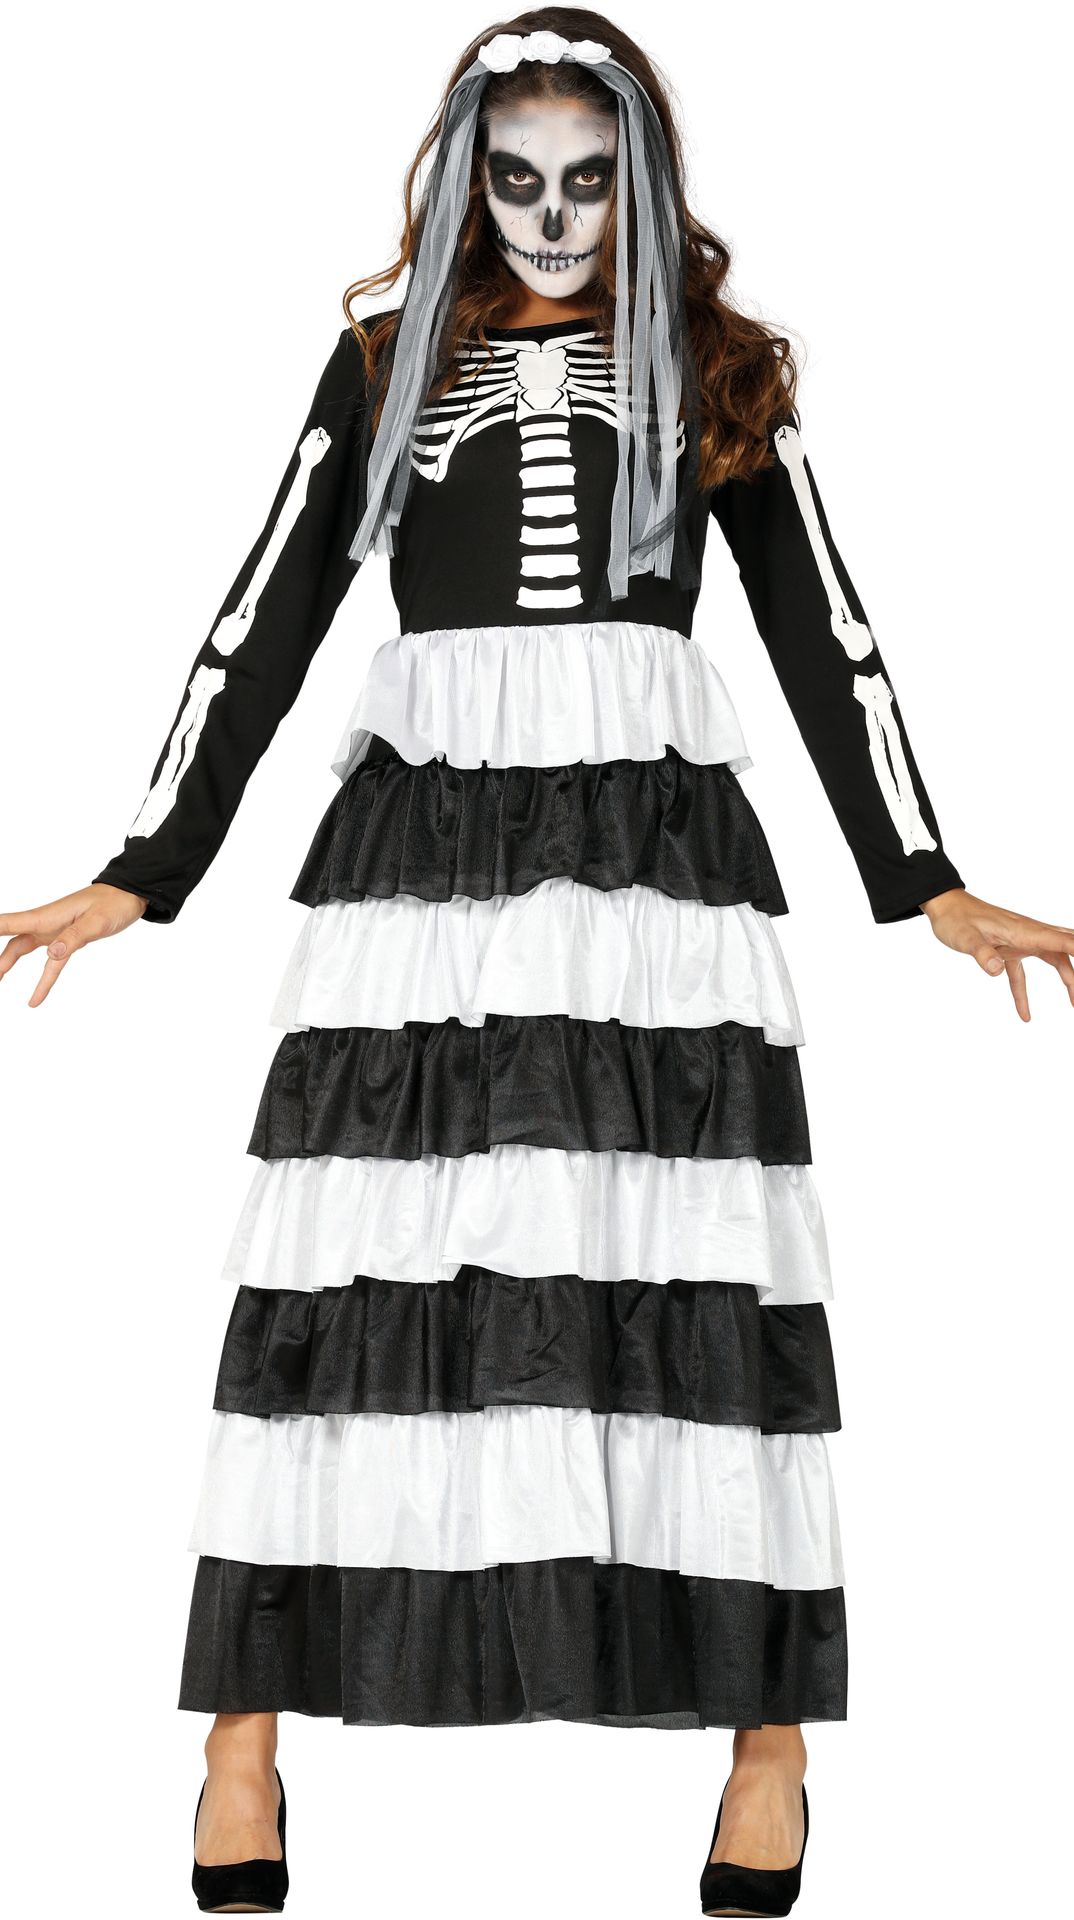 Zwart wit skelet outfit vrouwen